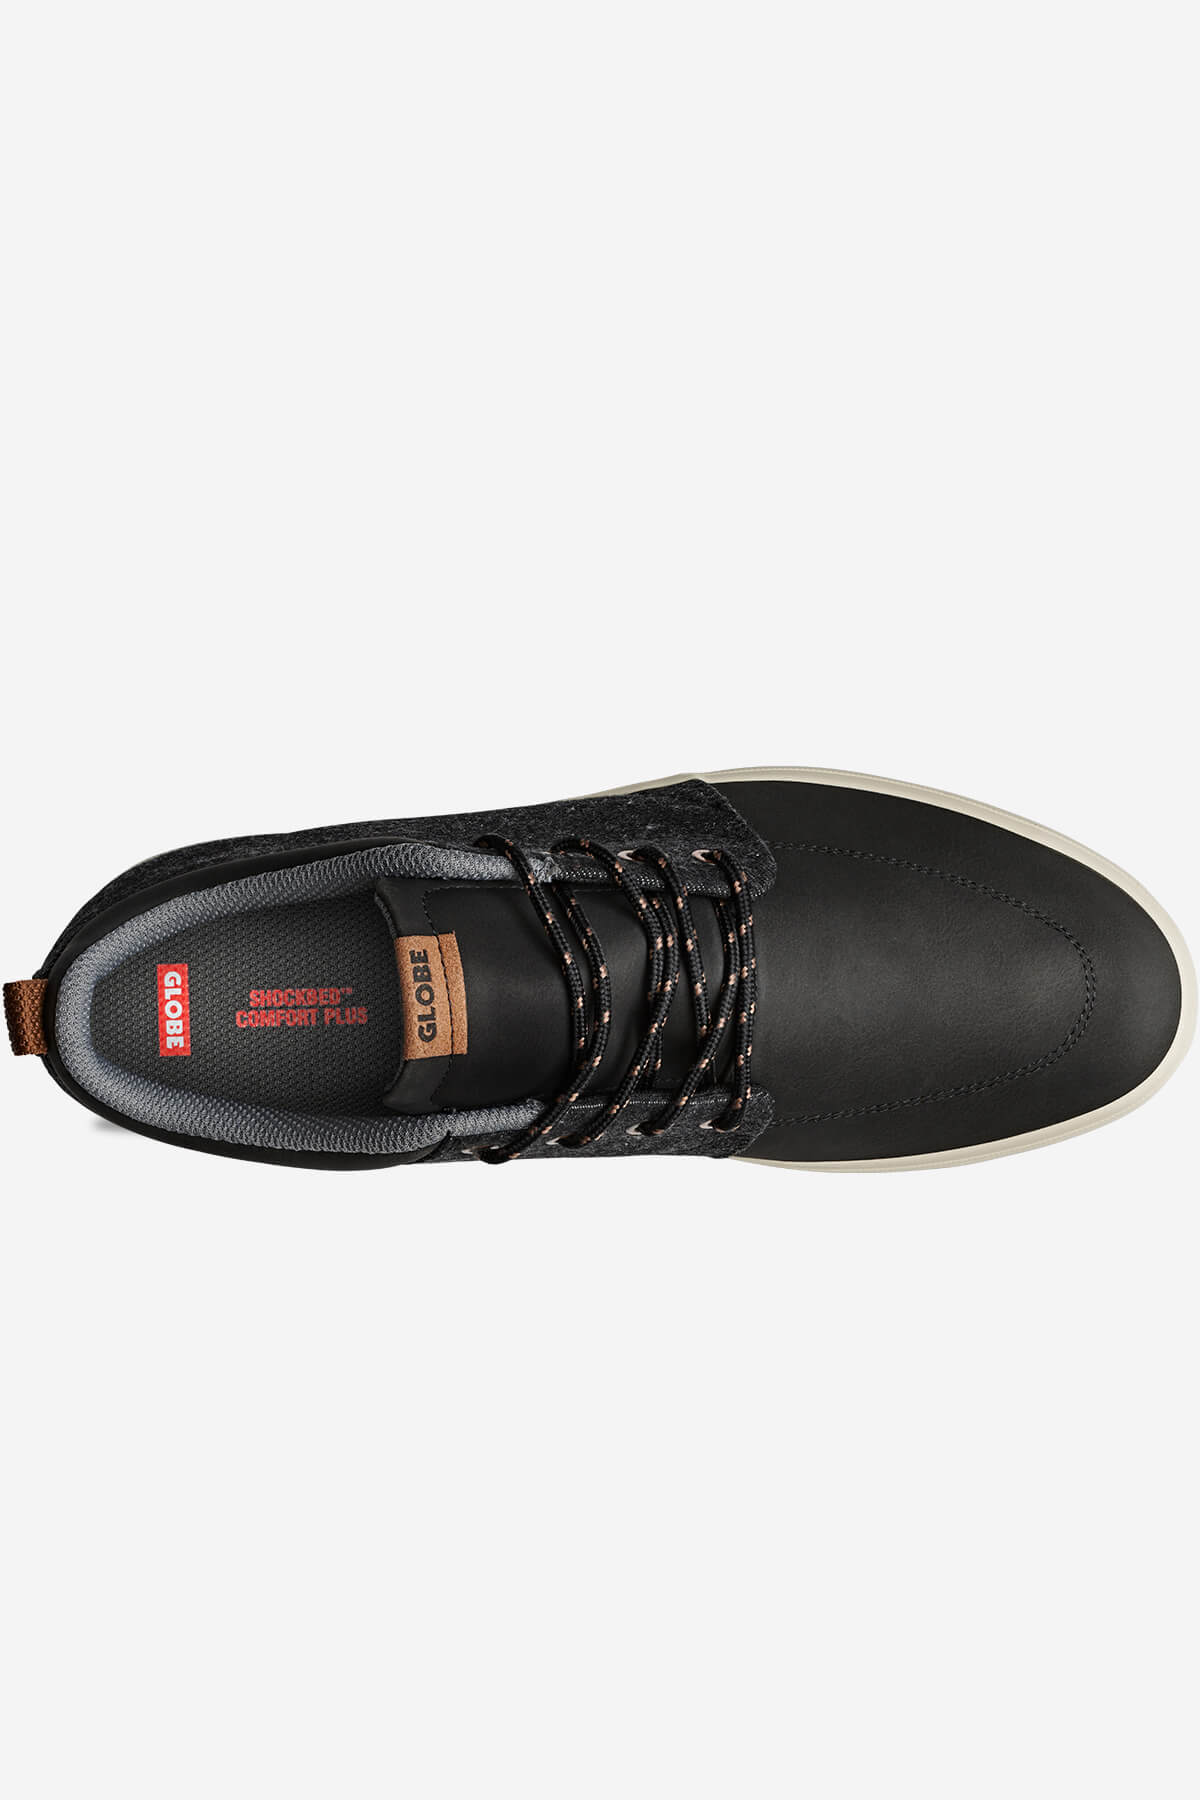 gs chukka black denim skateboard shoes